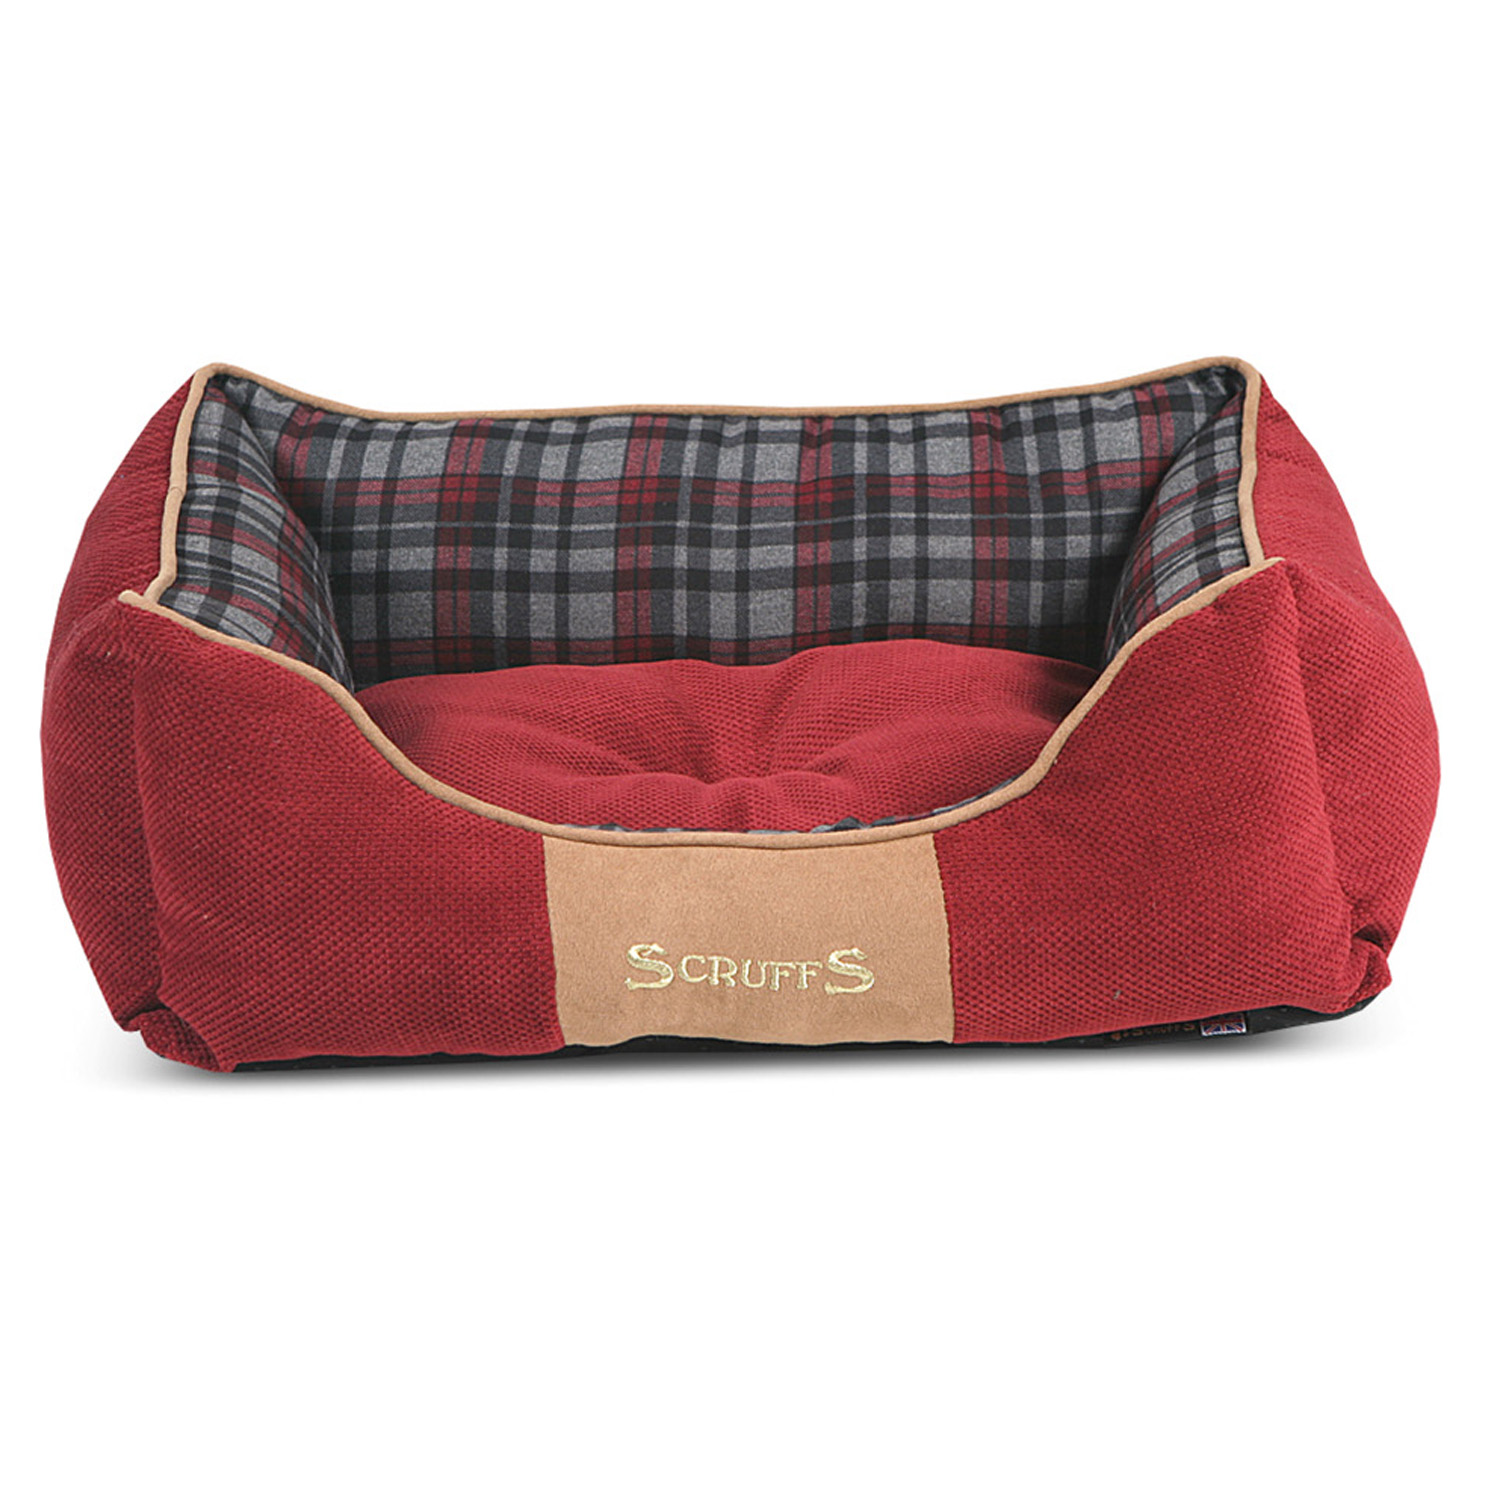 Scruffs Highland Box Bed Red - Small